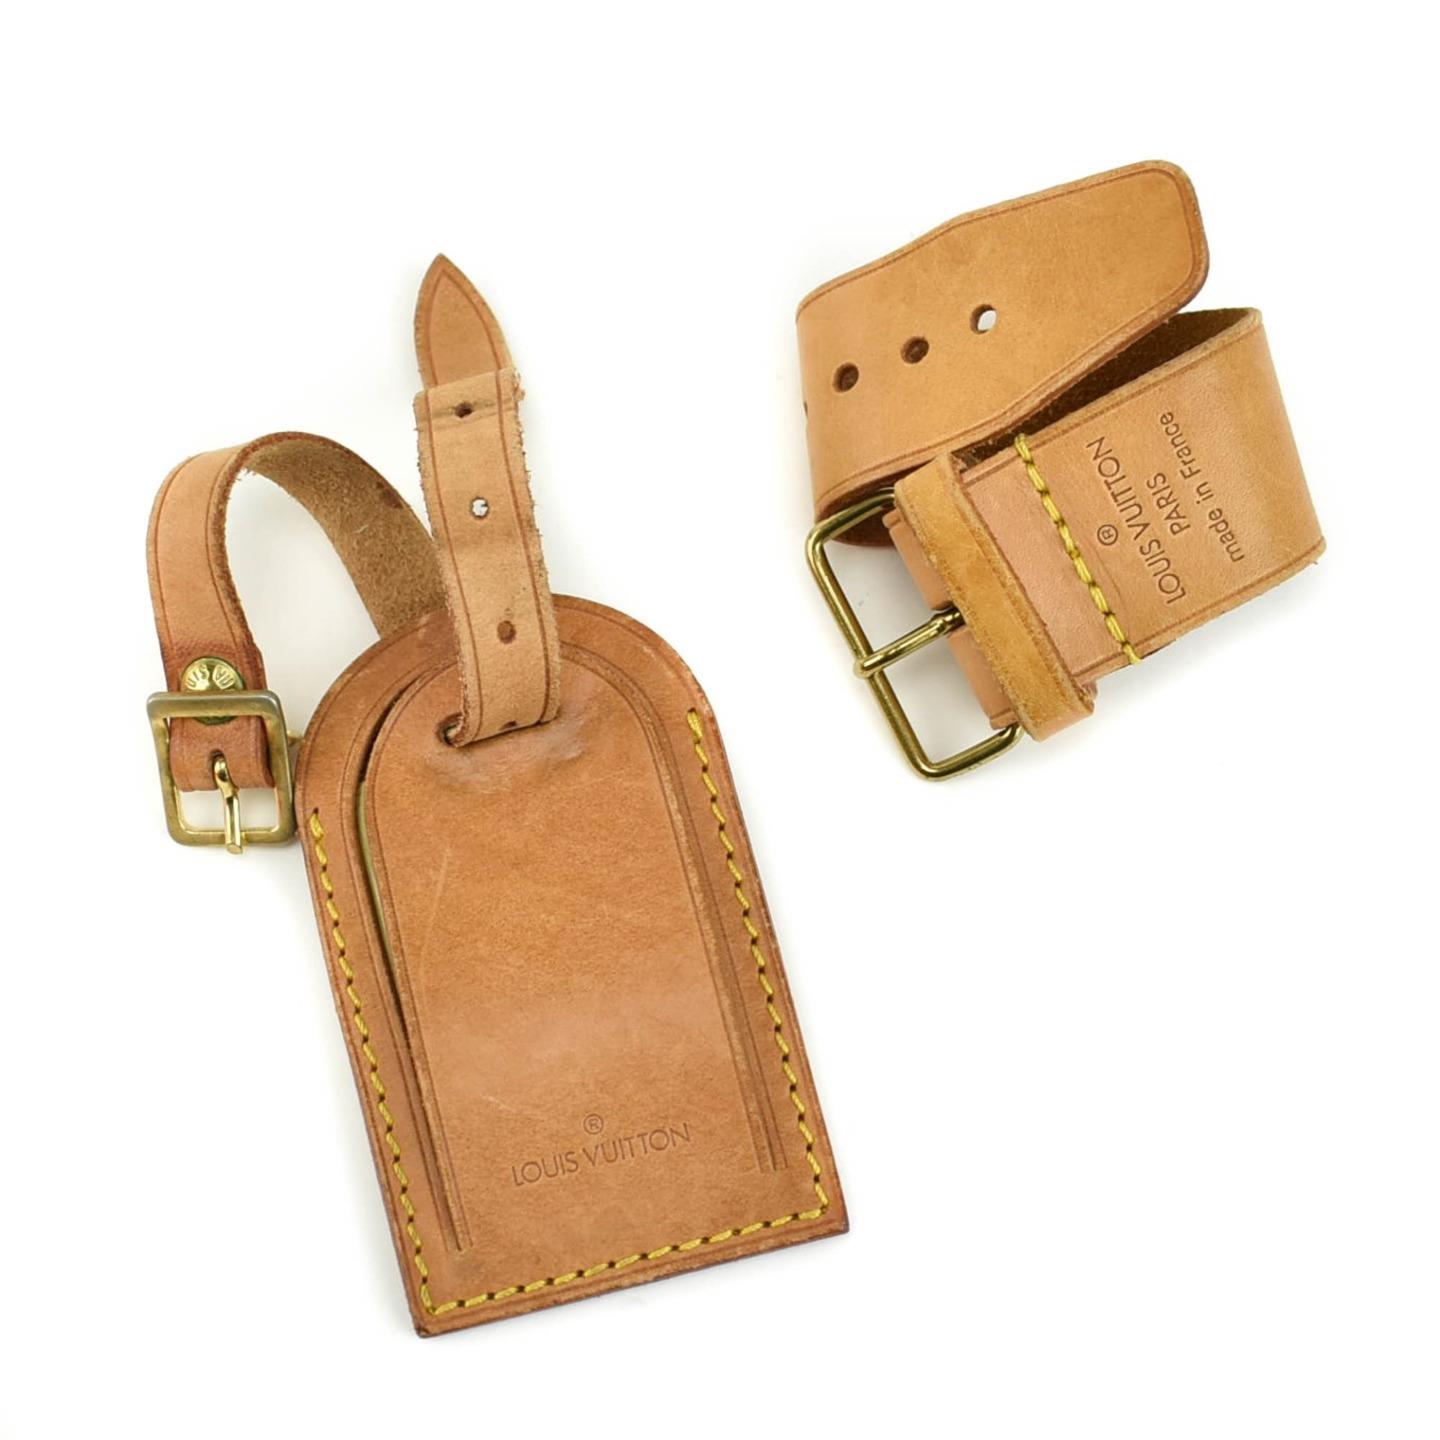 LOUIS VUITTON: Tan, Vachetta Leather Logo Luggage Tag & Keepall Set (pr) | eBay